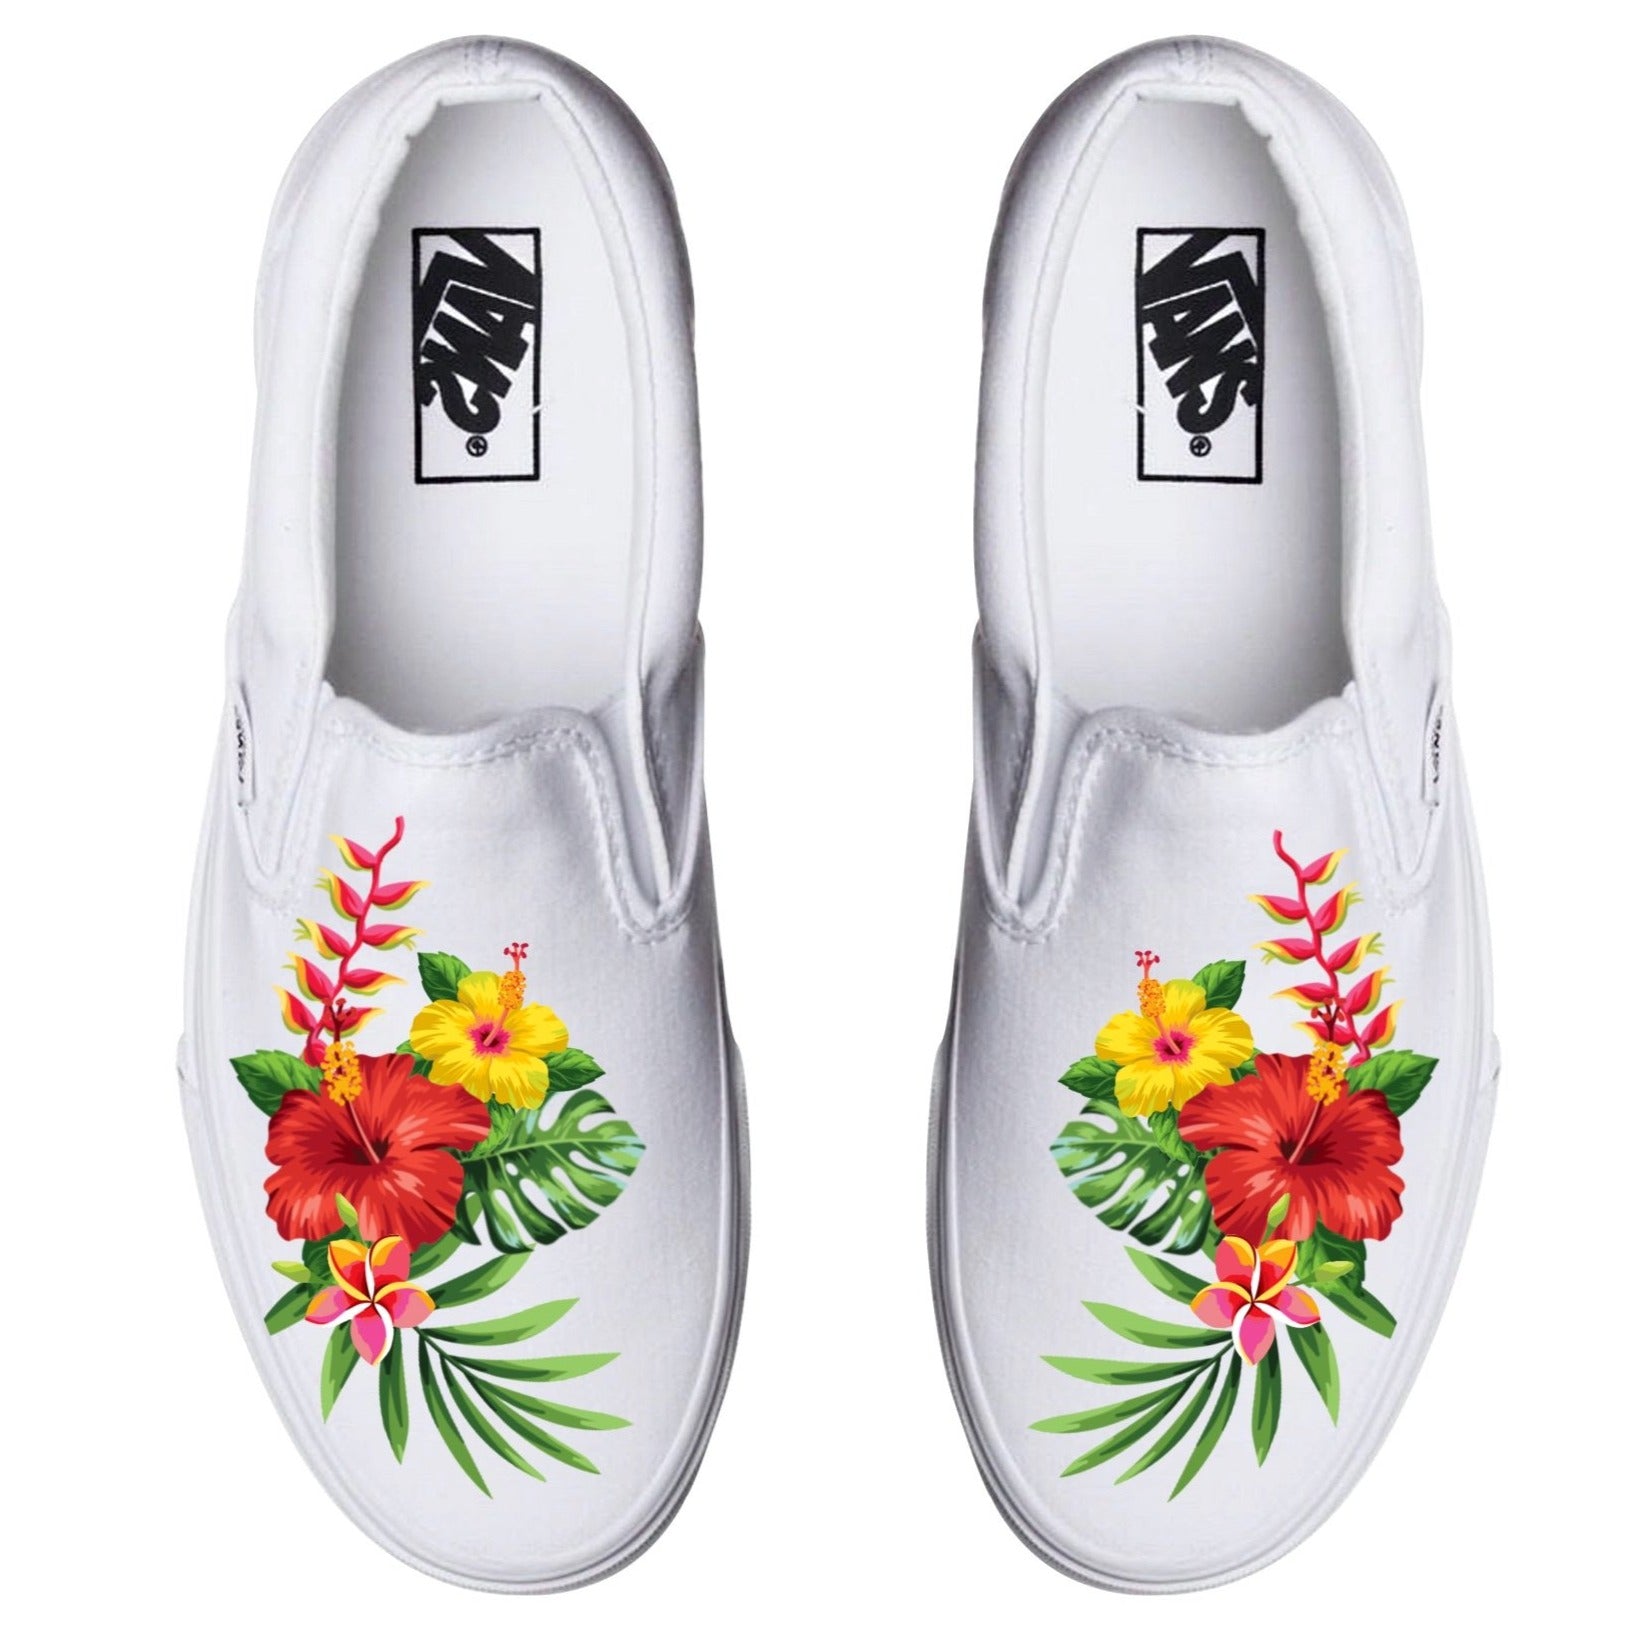 white slip on vans with flowers